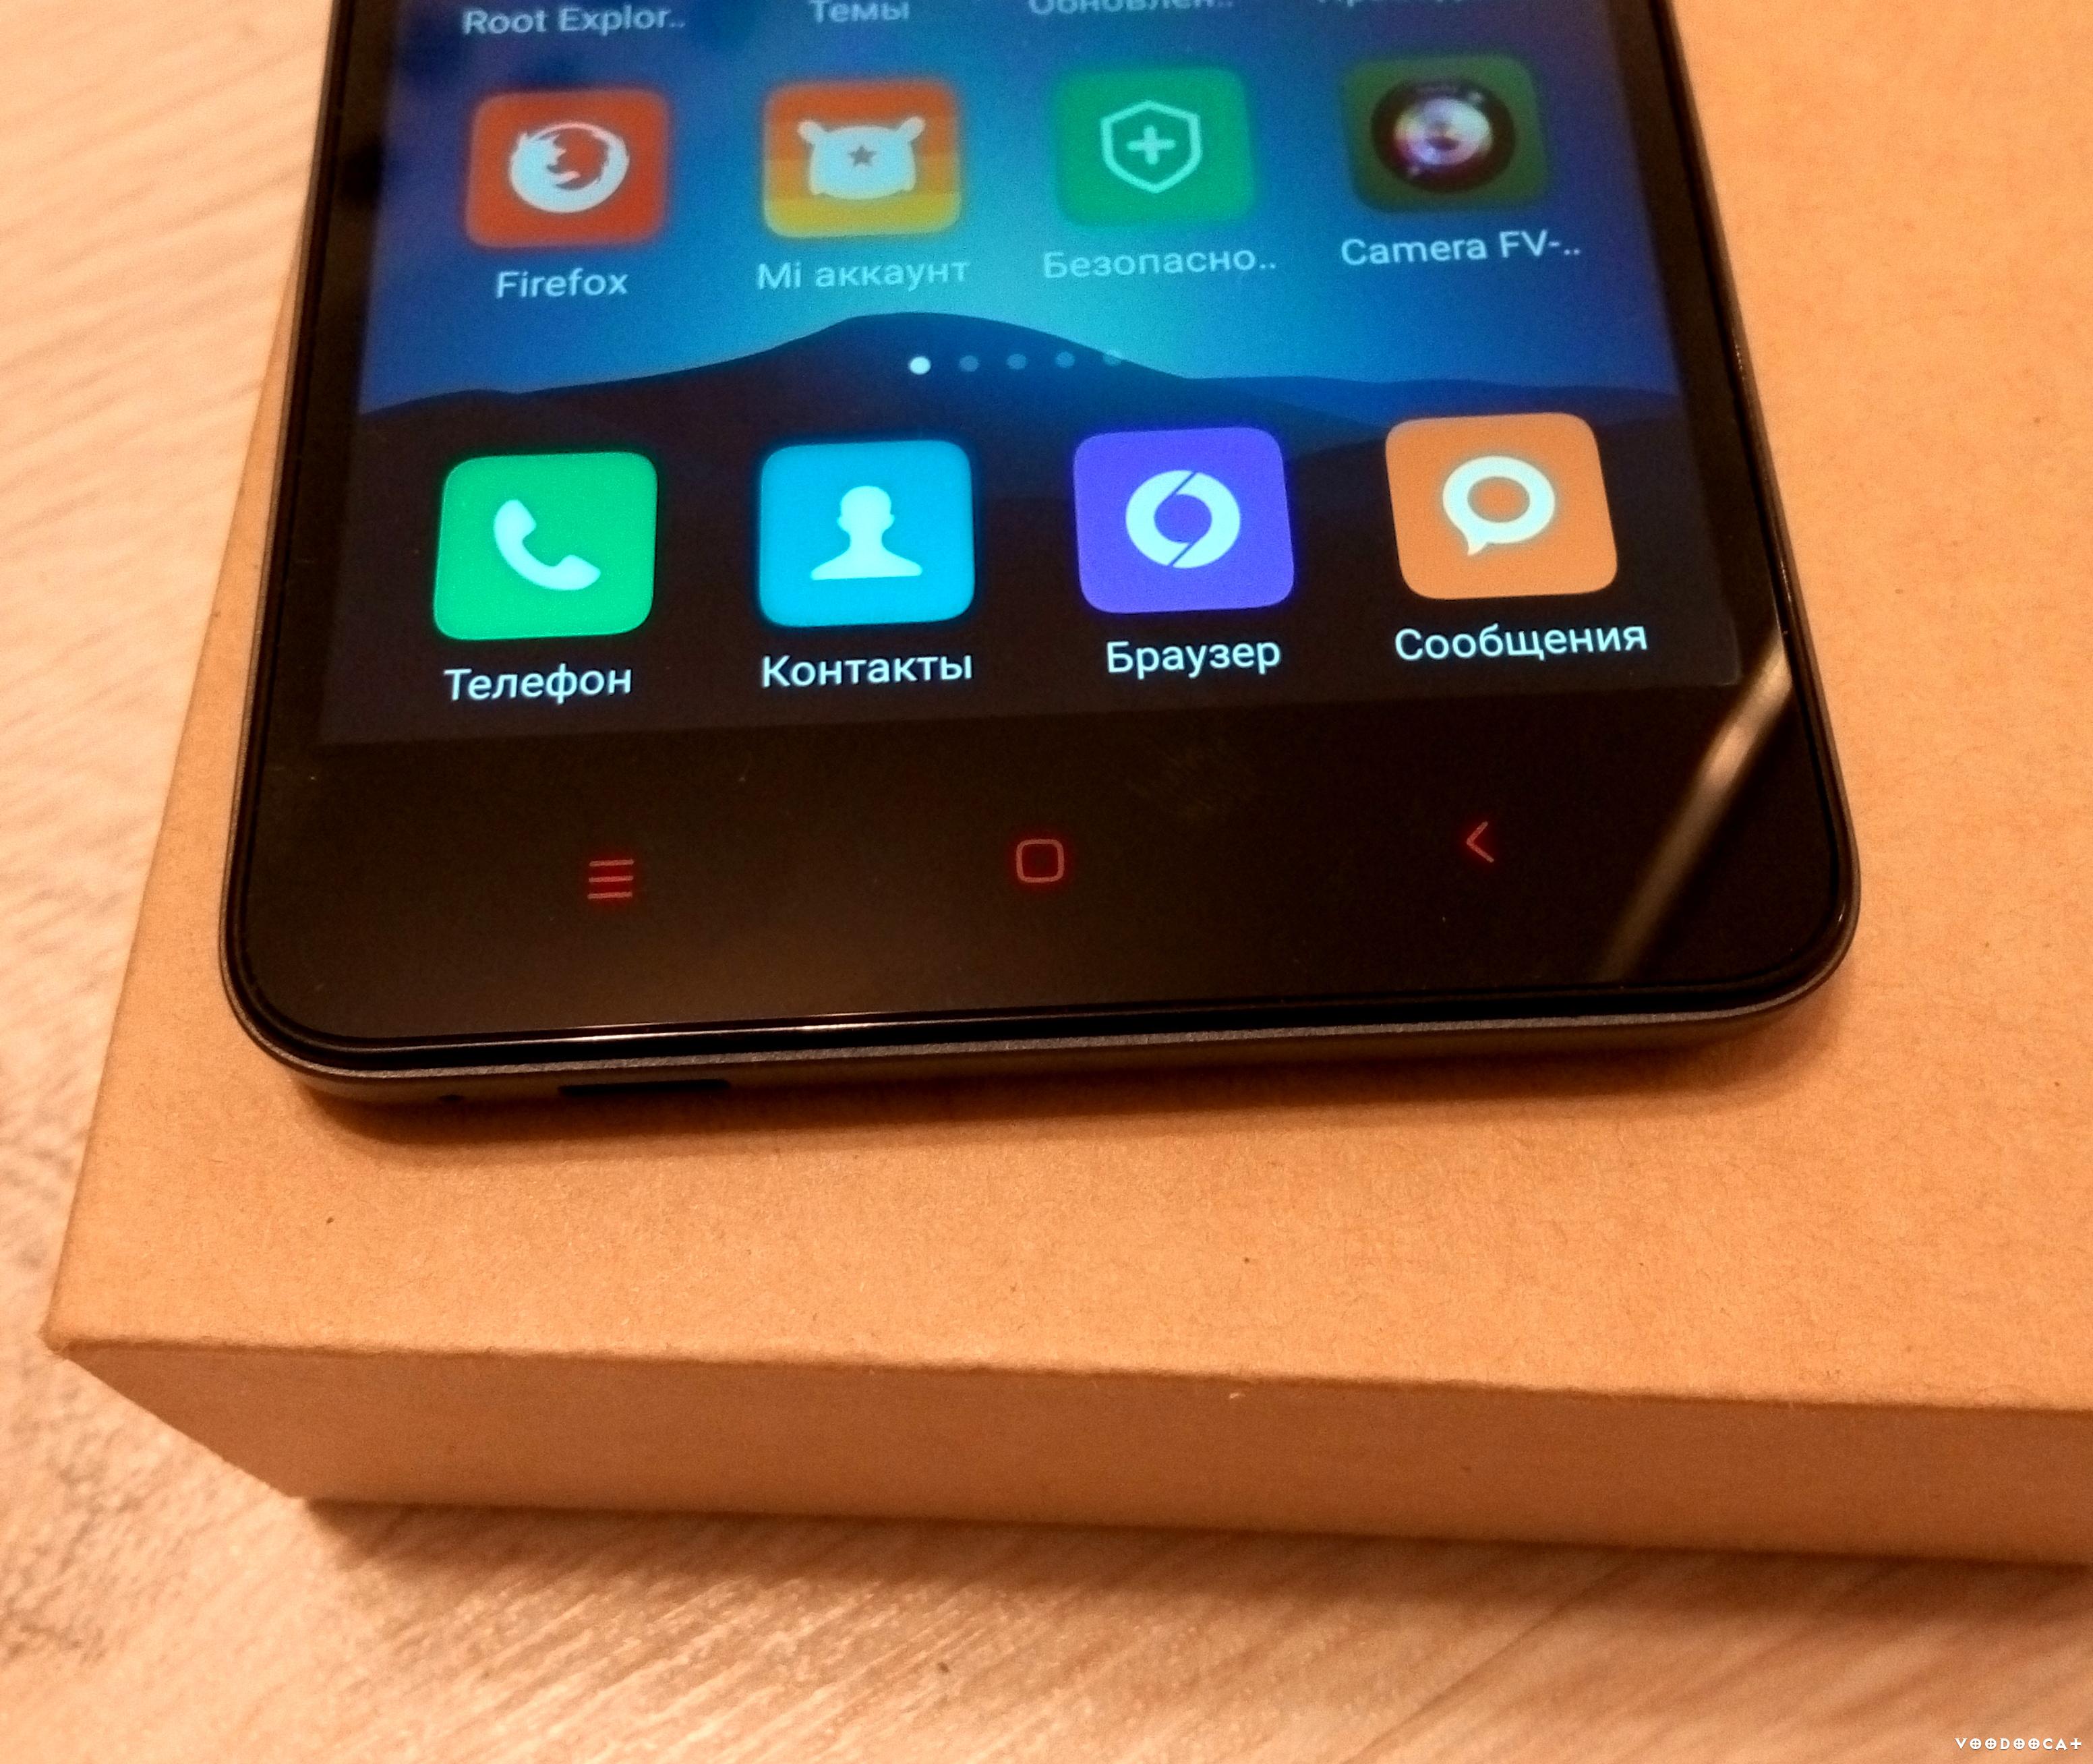 Обзор телефона Xiaomi Redmi Note 2 16GB